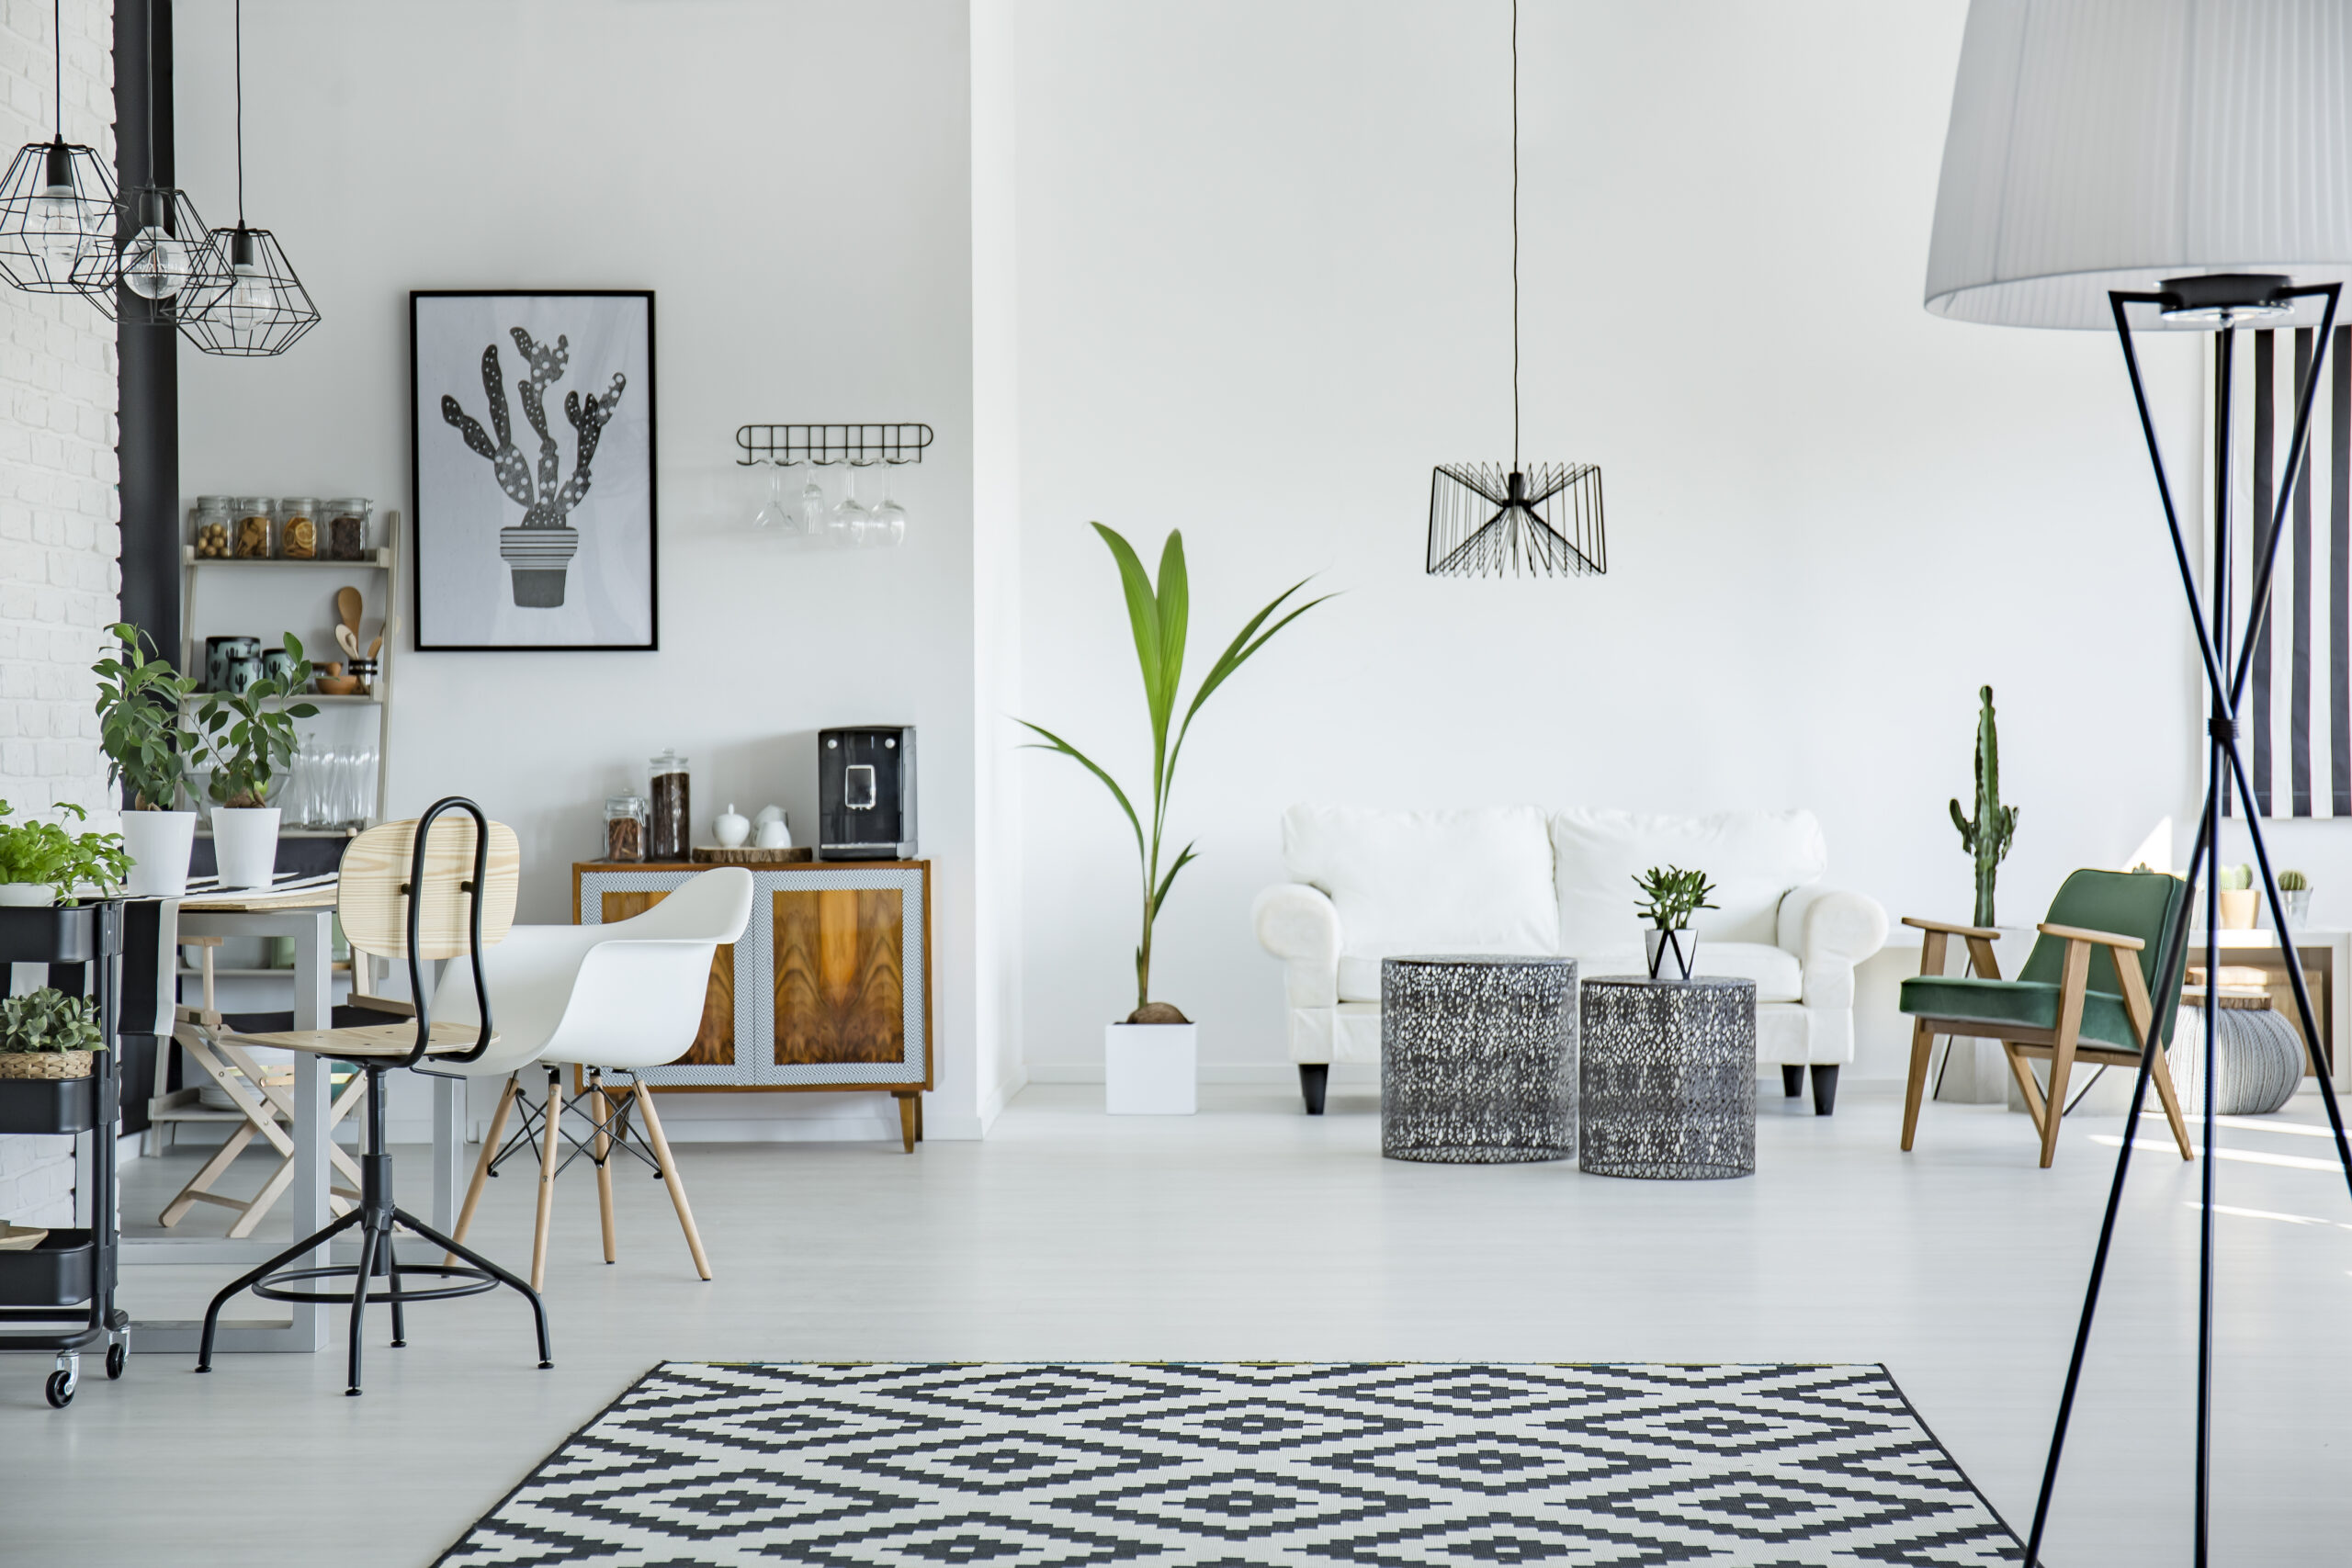 White loft interior in scandinavian style with pattern carpet